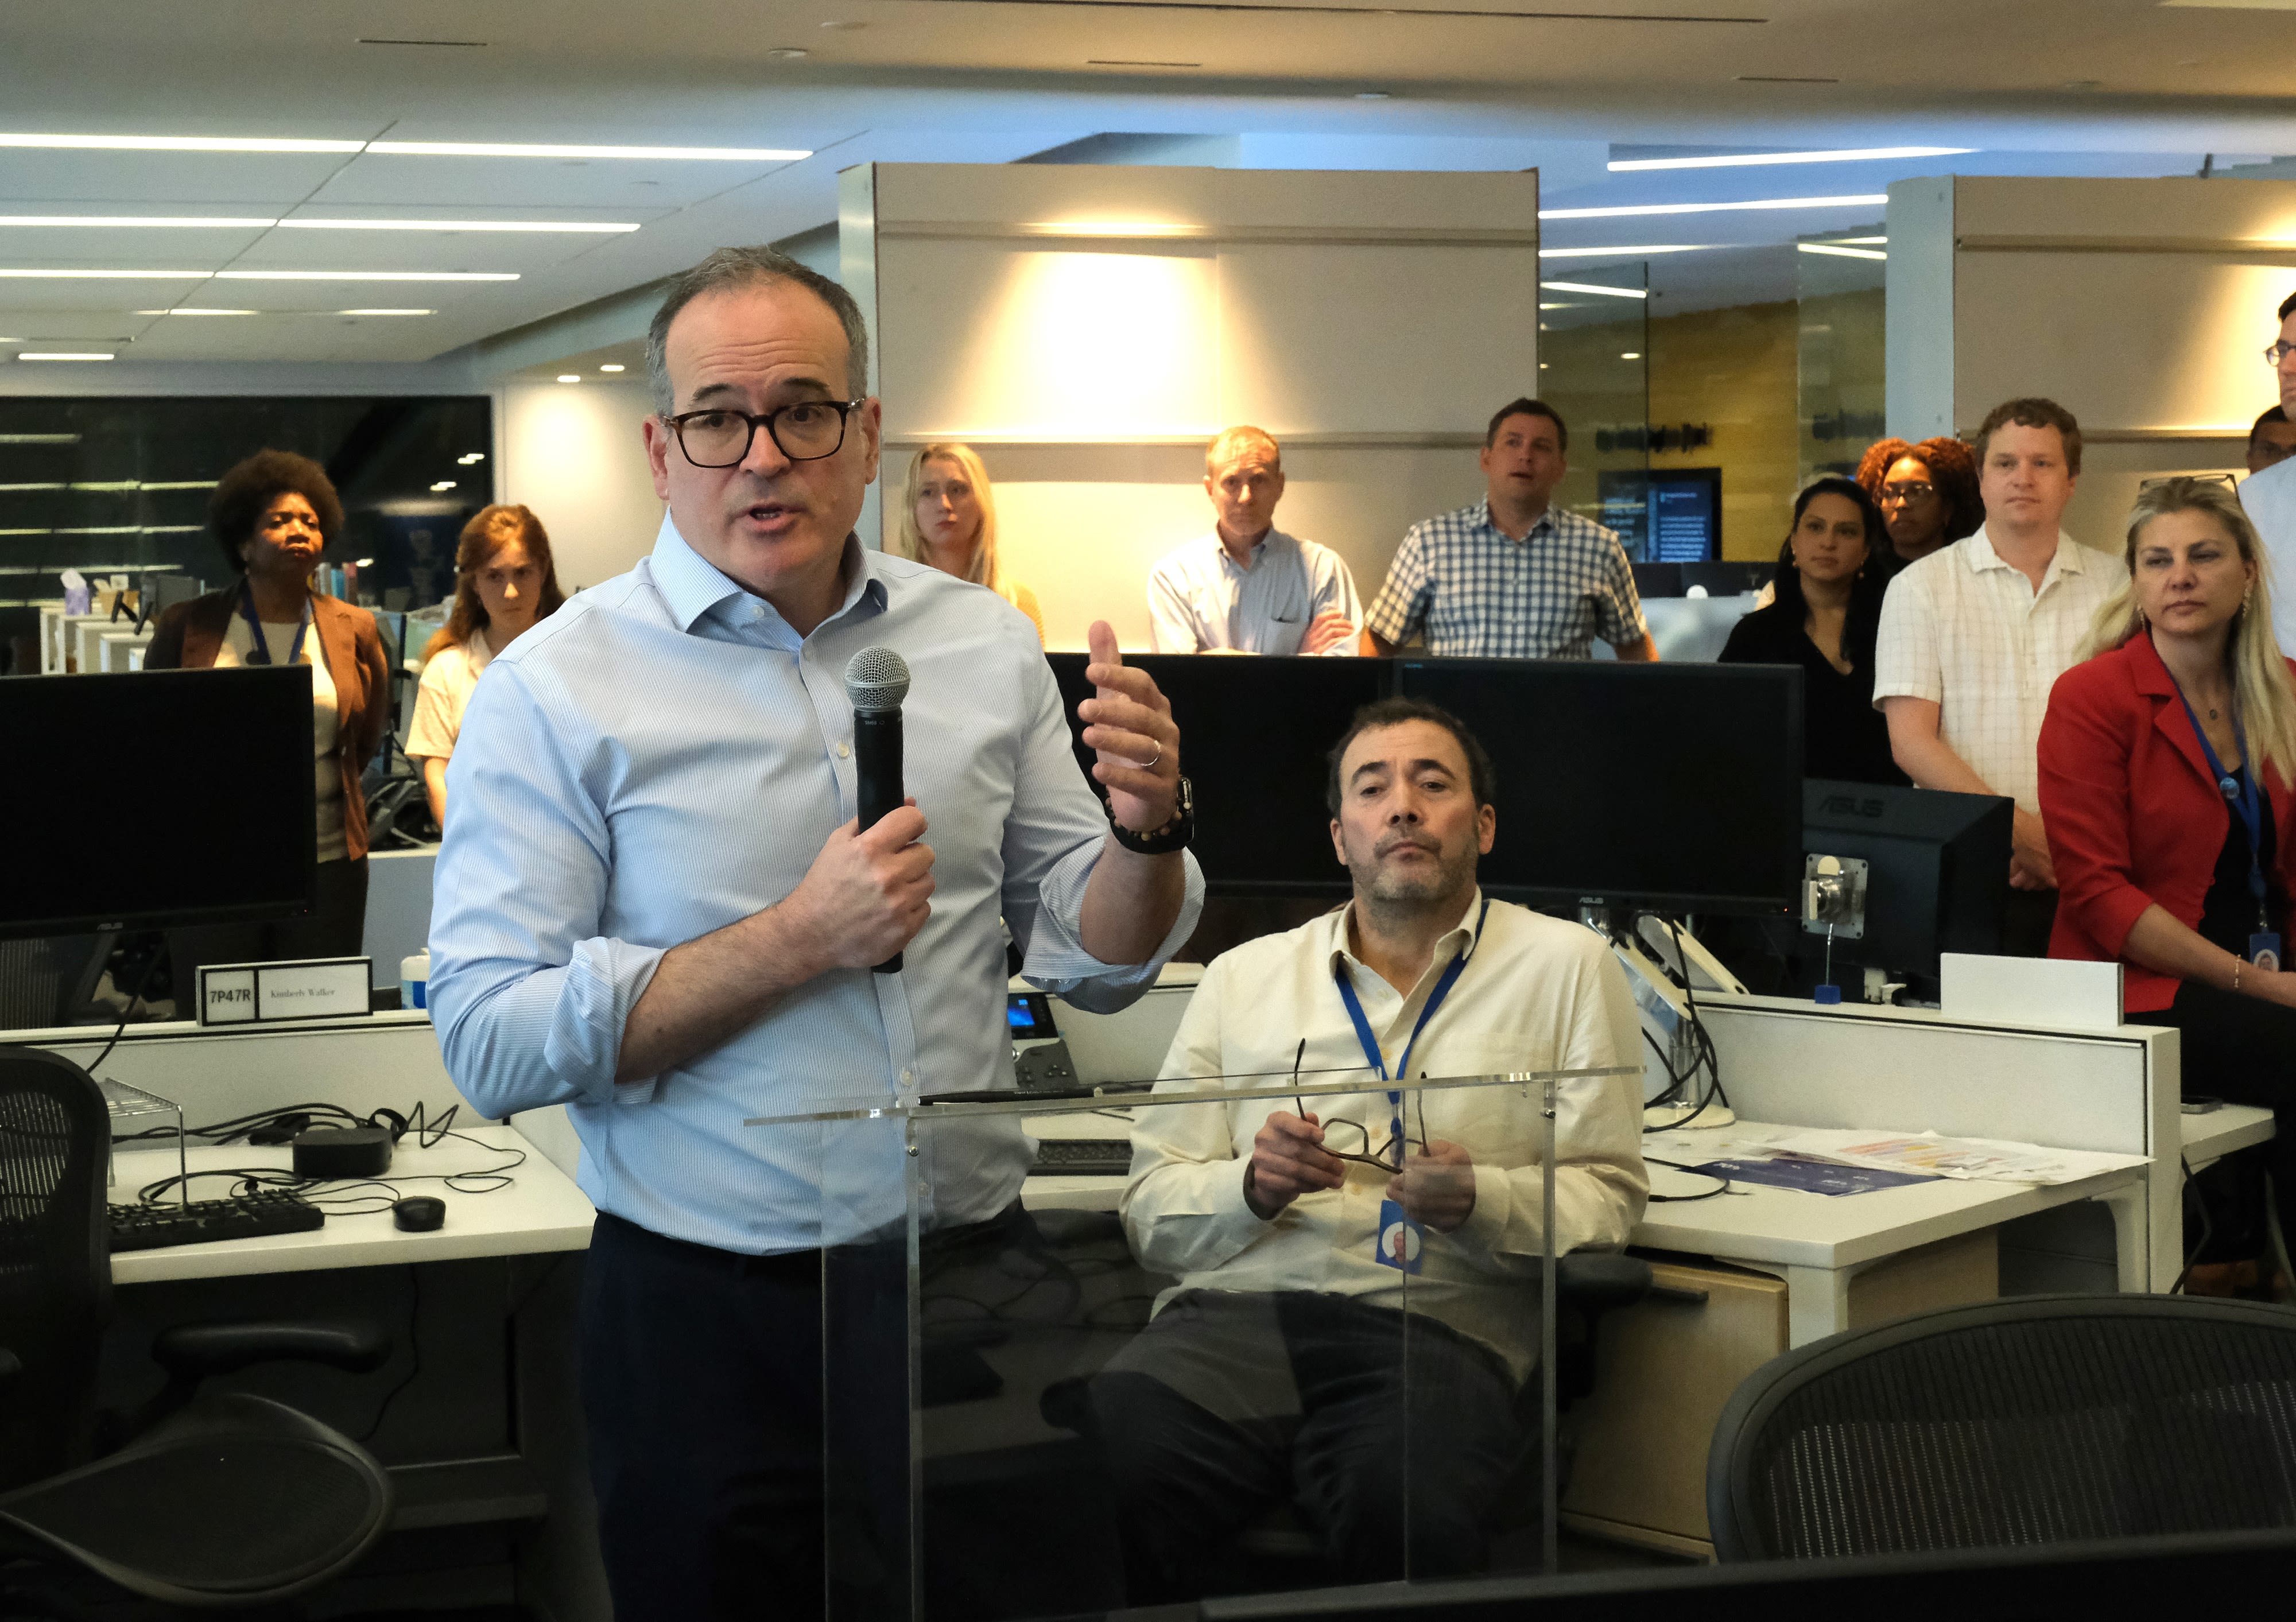 New Washington Post editor Matt Murray meets staff after abrupt Buzbee exit